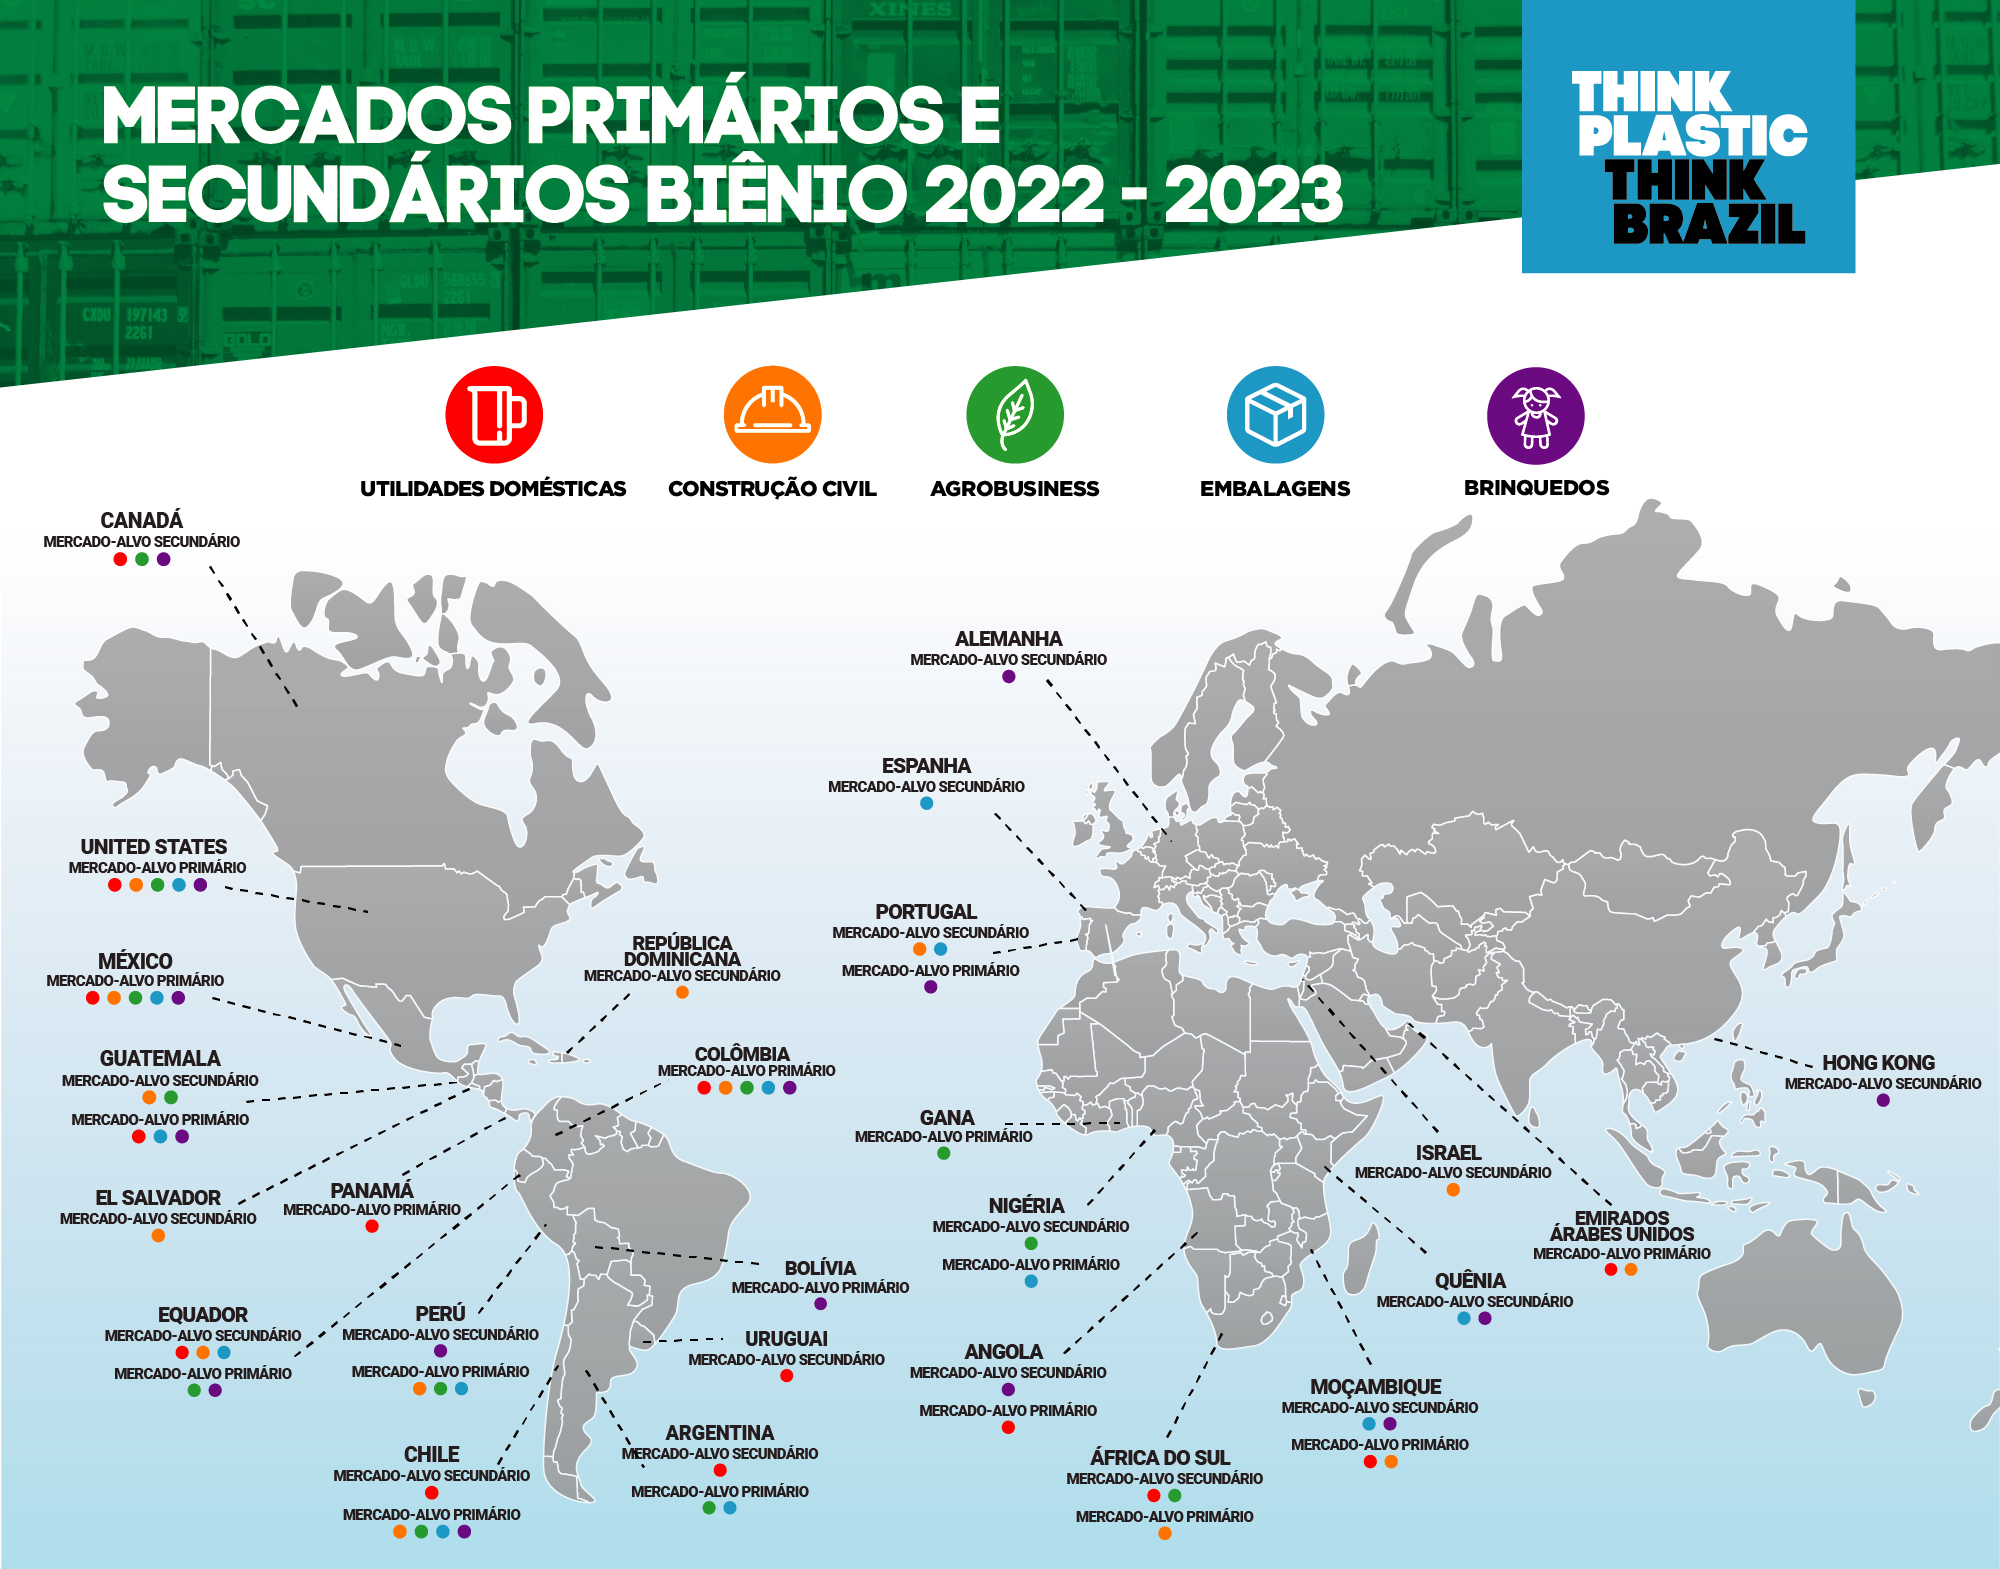 Think Plastic Brazil prioriza mercados internacionais para plásticos transformados